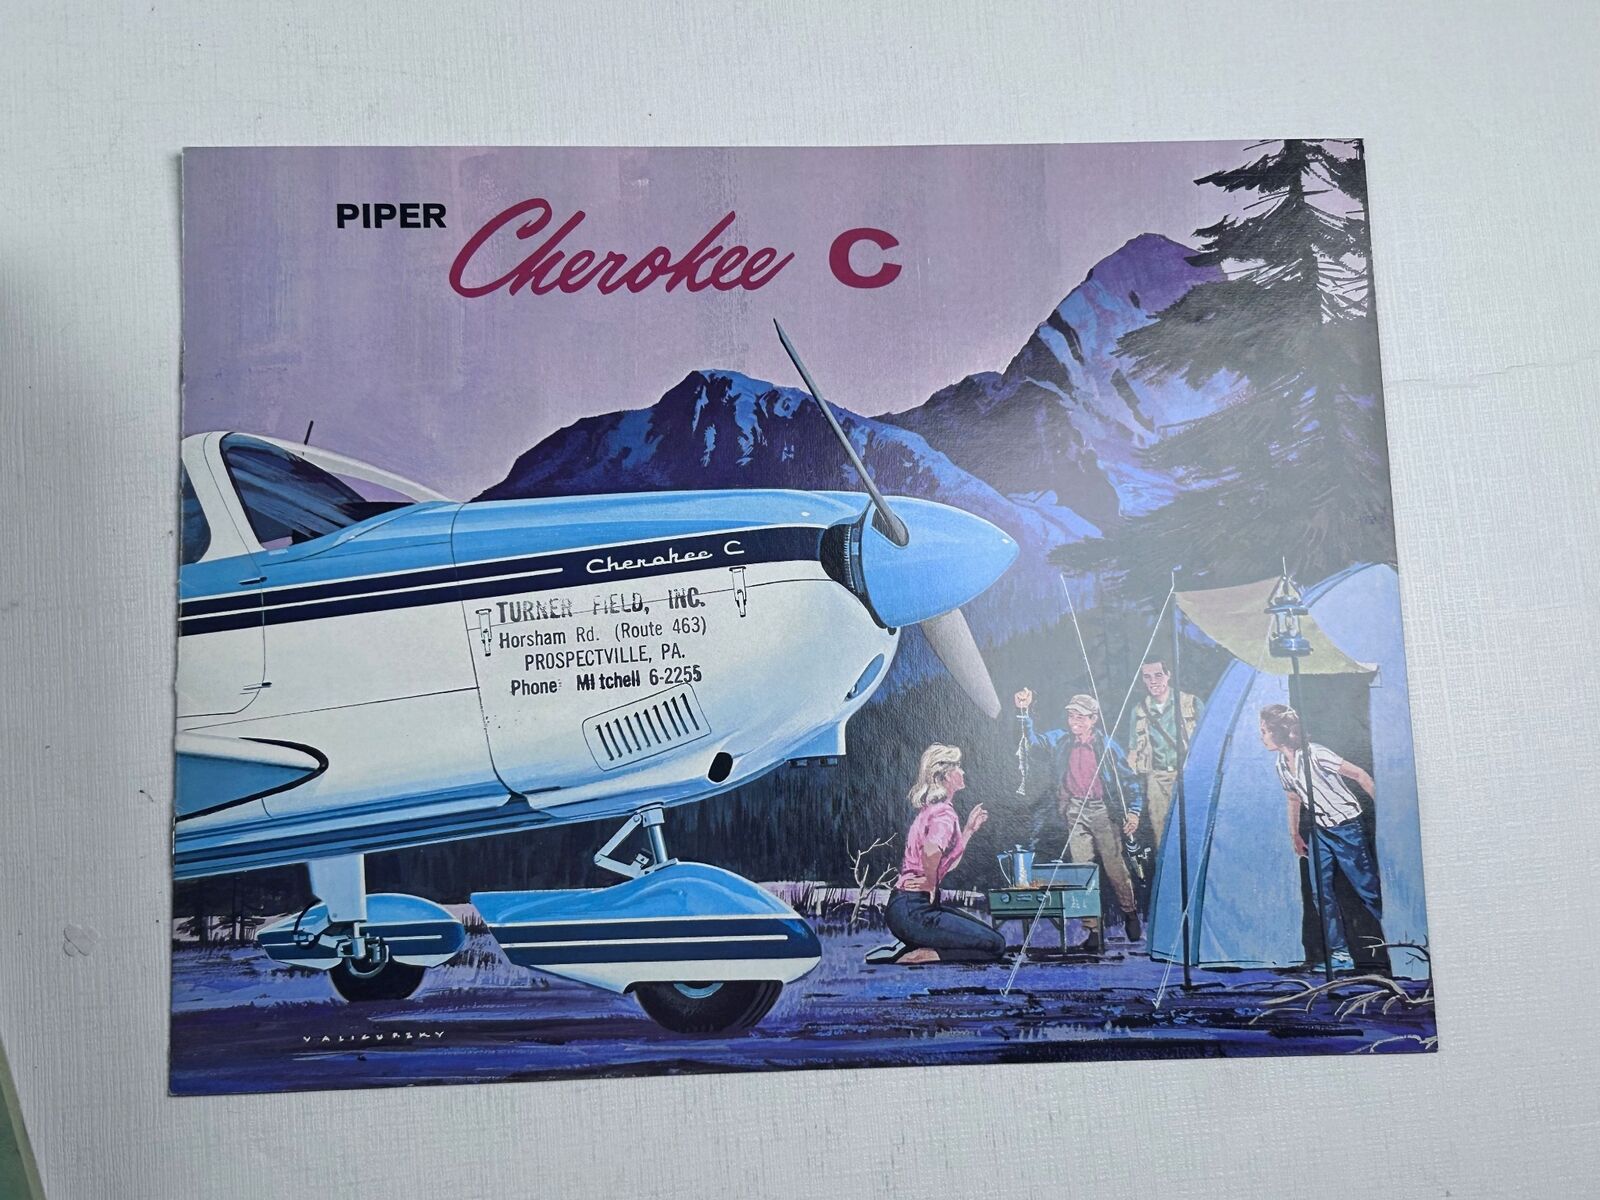 Piper Cherokee C Airplane Brochure 